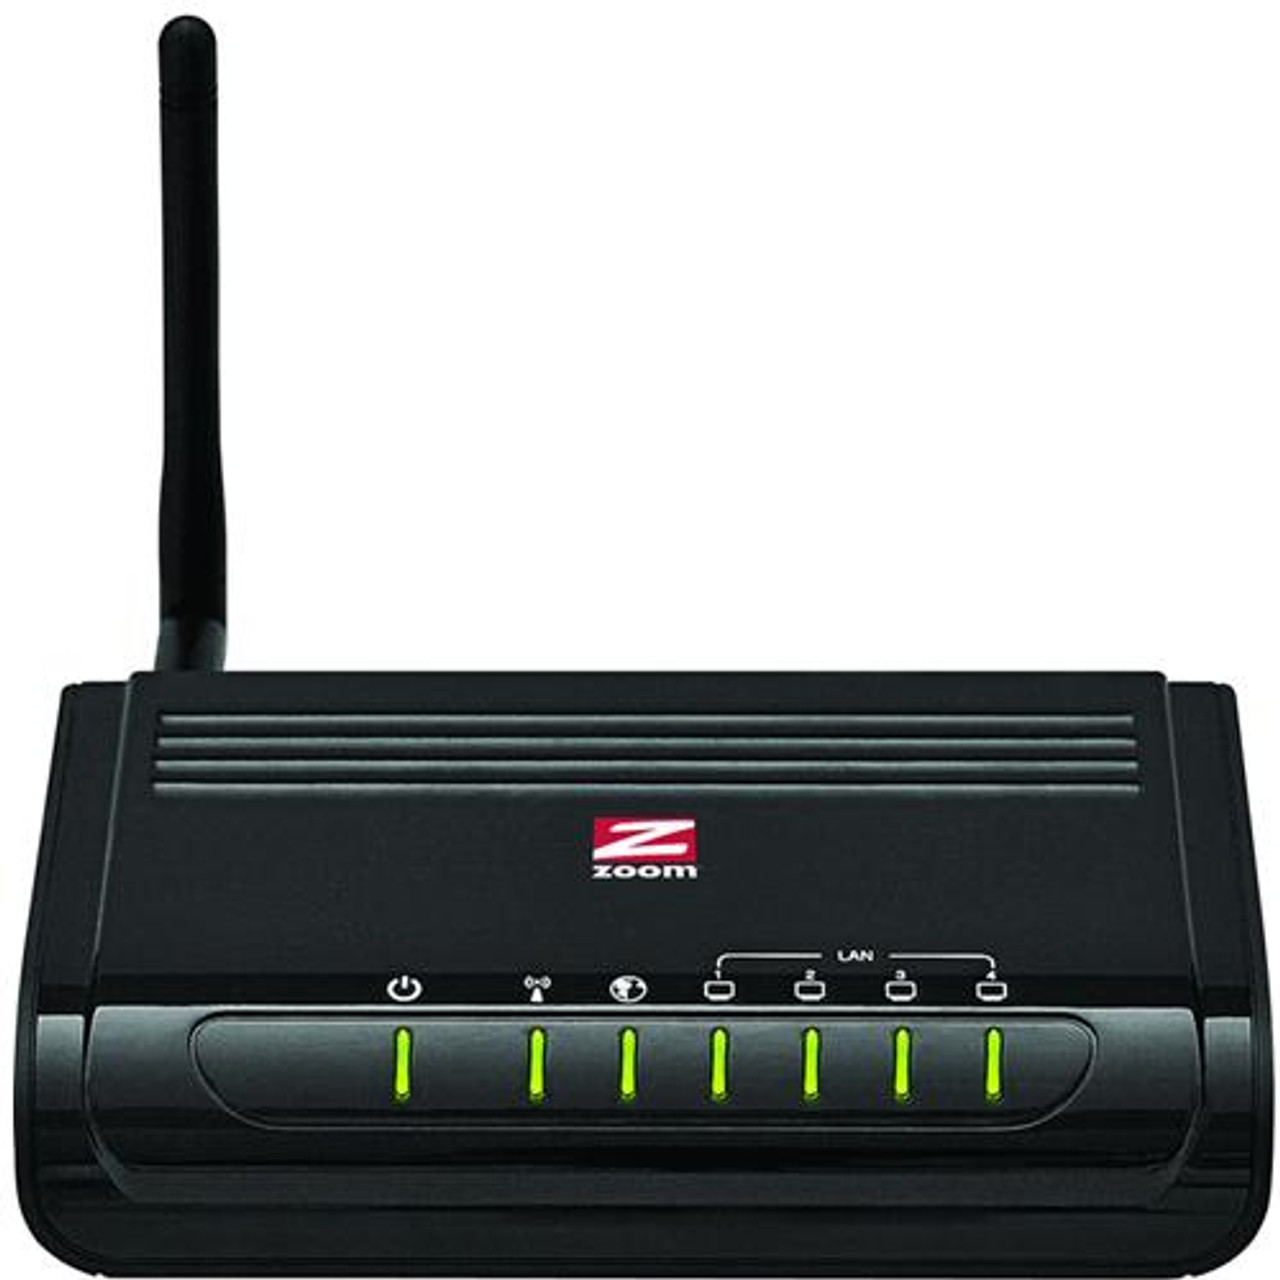 4402-00-00F Zoom 4402 Wireless Router 150 Mbps 4 Network LAN IEEE 802.11n (draft) (Refurbished)